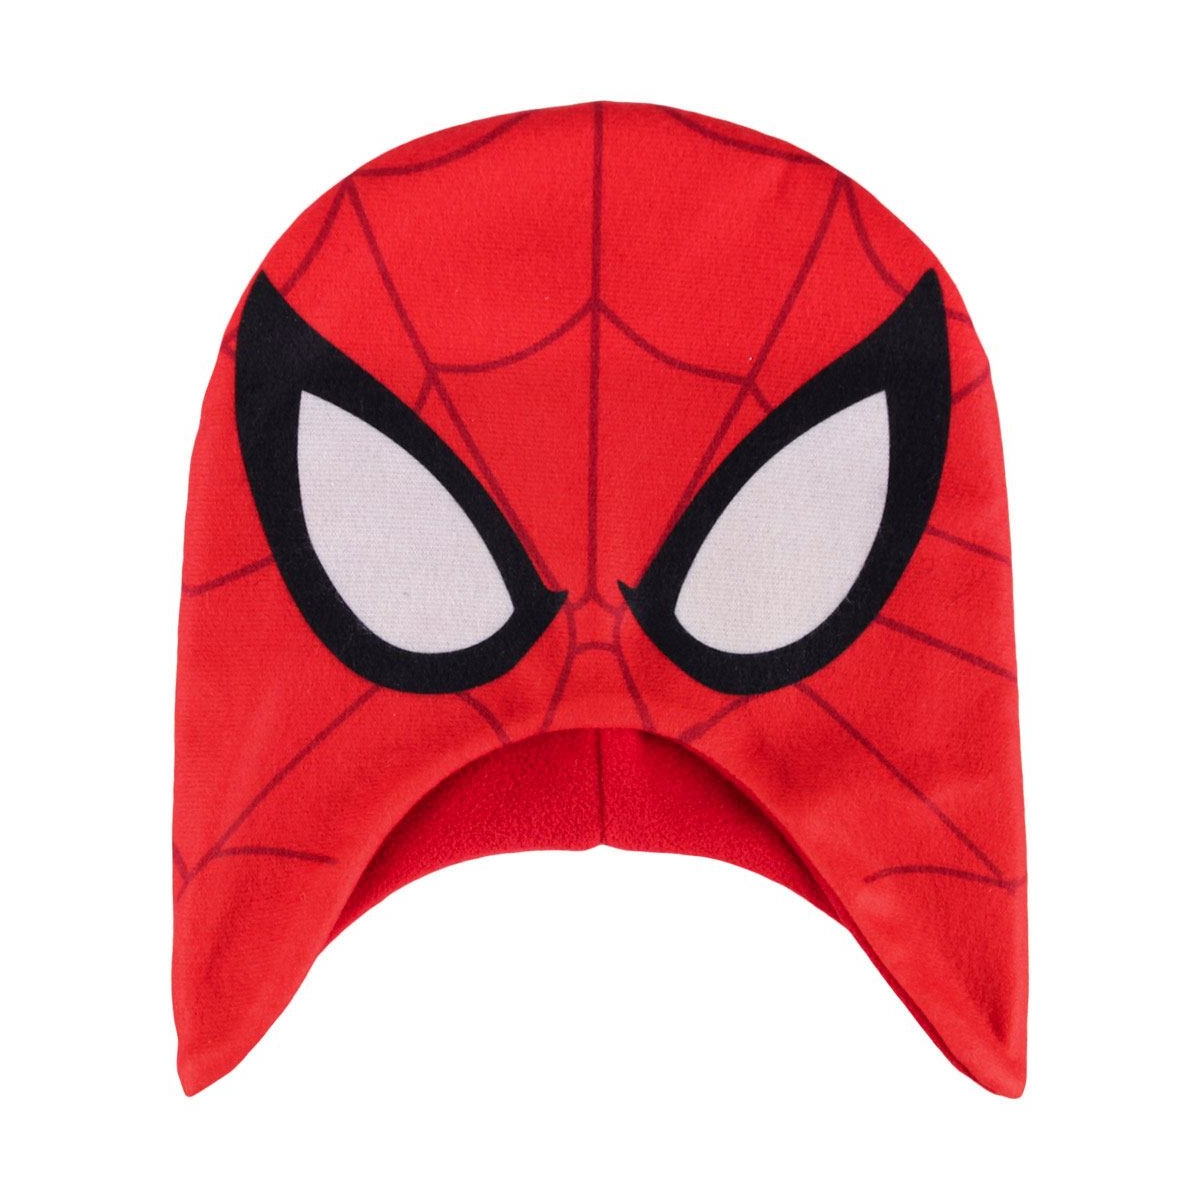 https://www.figurine-discount.com/14565-thickbox_default/spider-man-bonnet-face.jpg